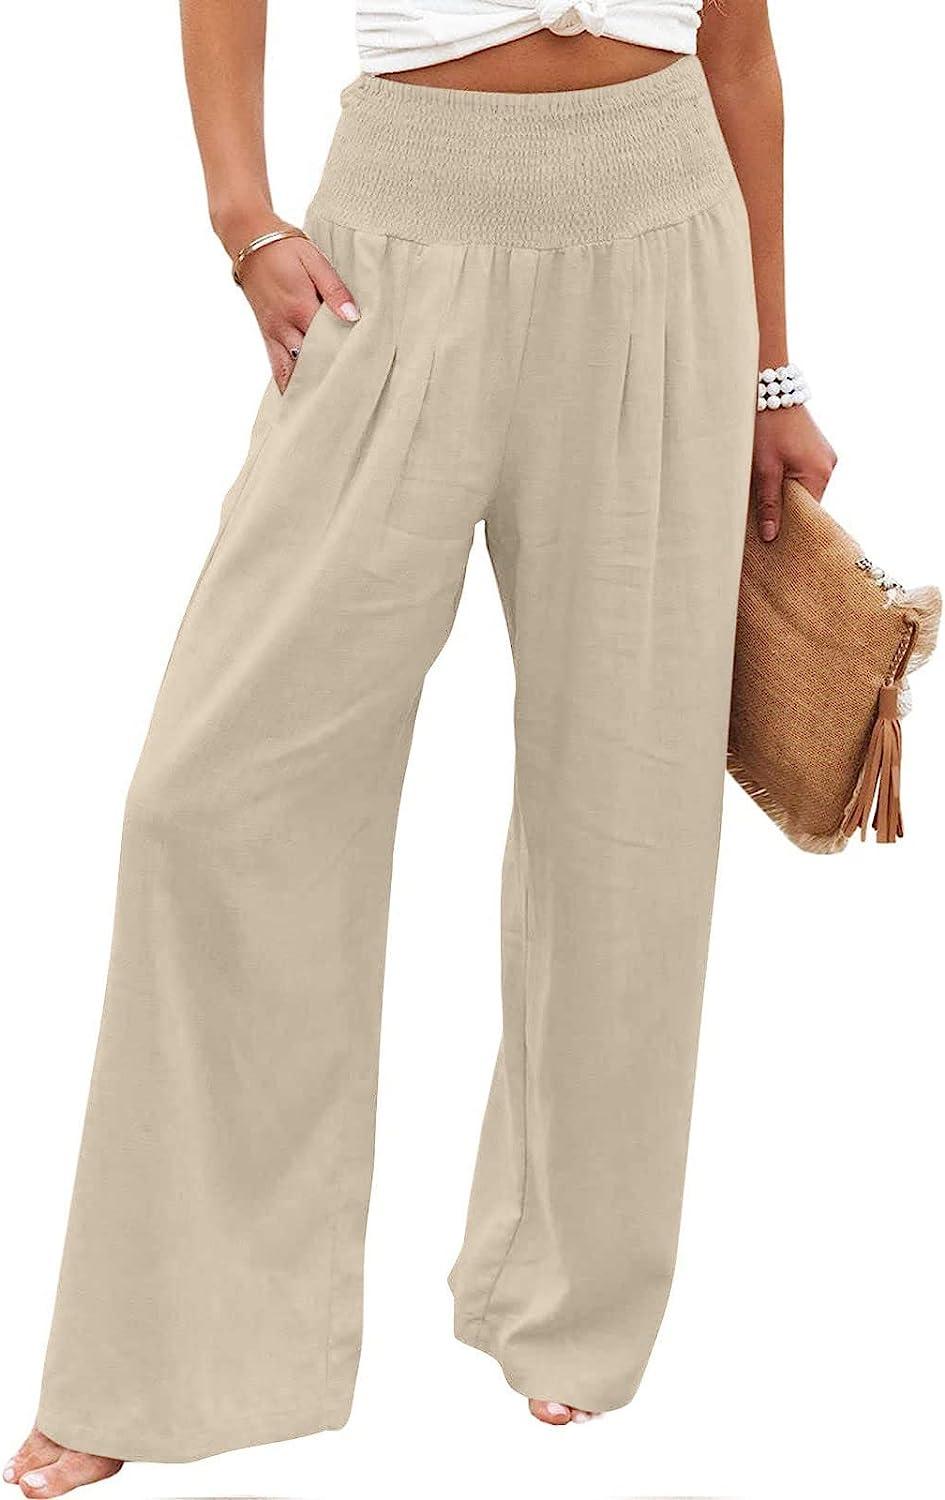 Cotton Capri Pants Women Summer Smocked Elastic High Waisted Linen